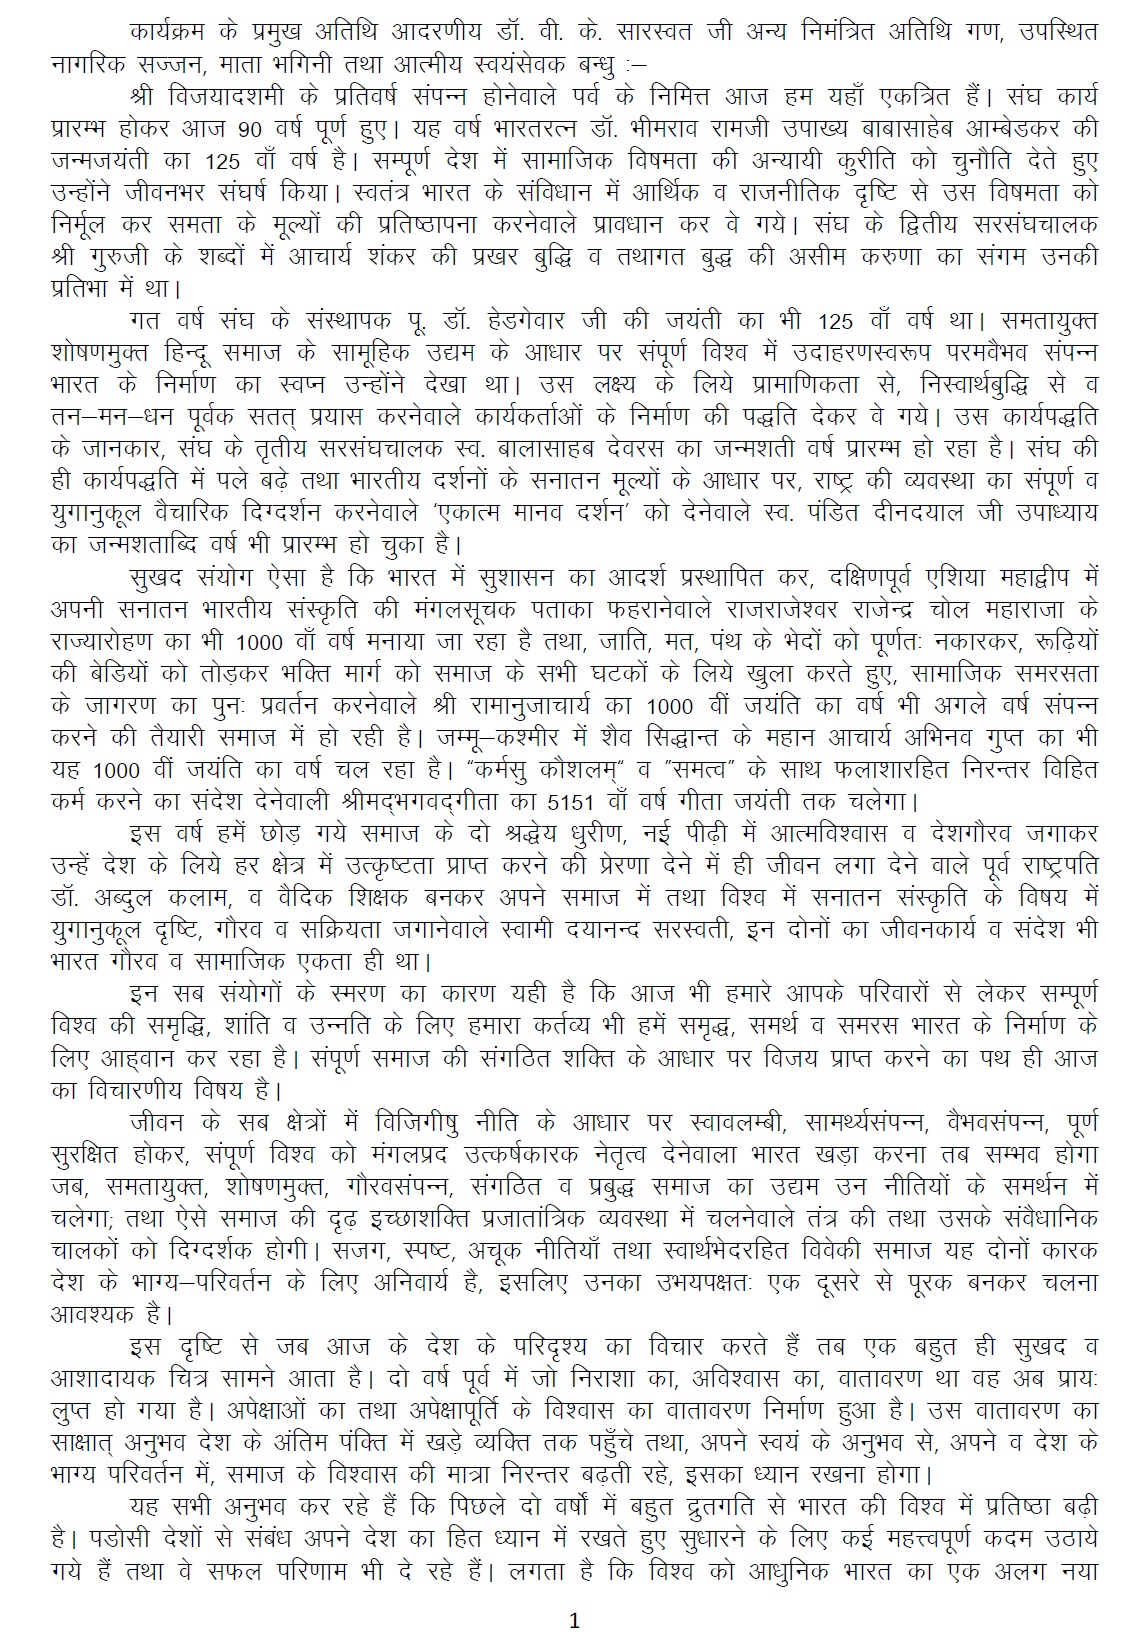 Hindi saraswati puja essays